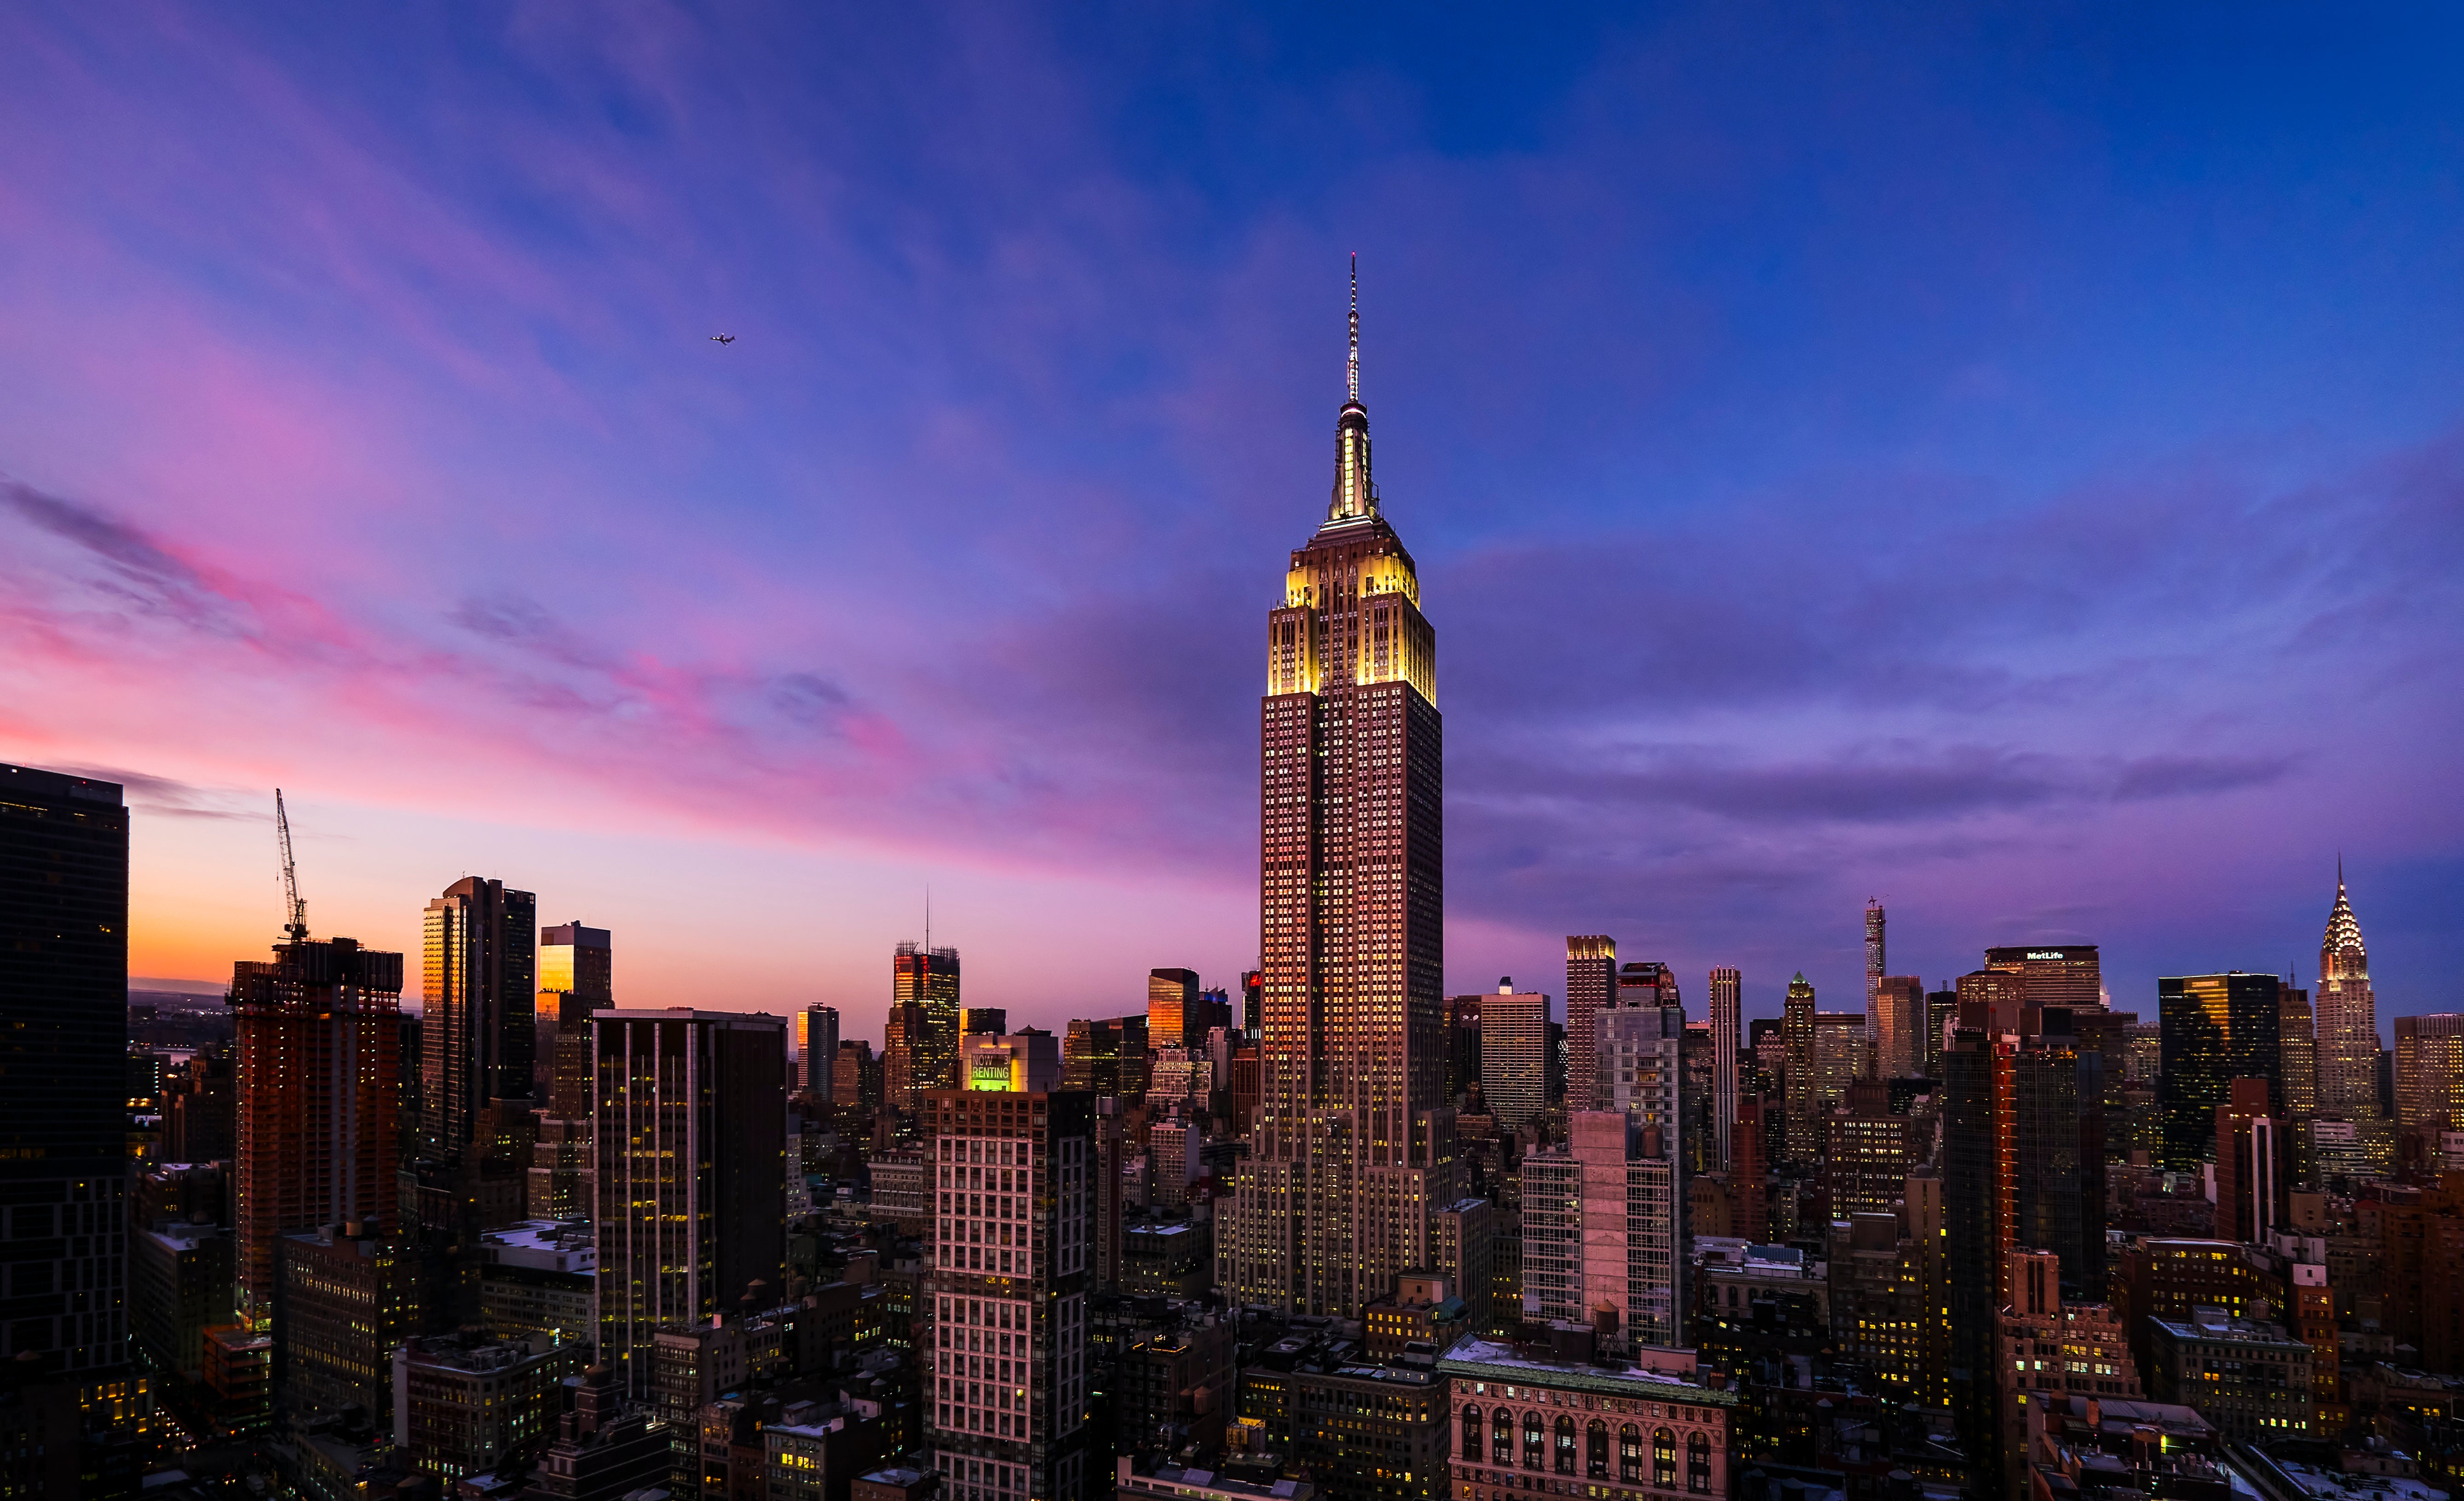 7 datos interesantes sobre el Empire State Building &#8211; Big 7 Travel